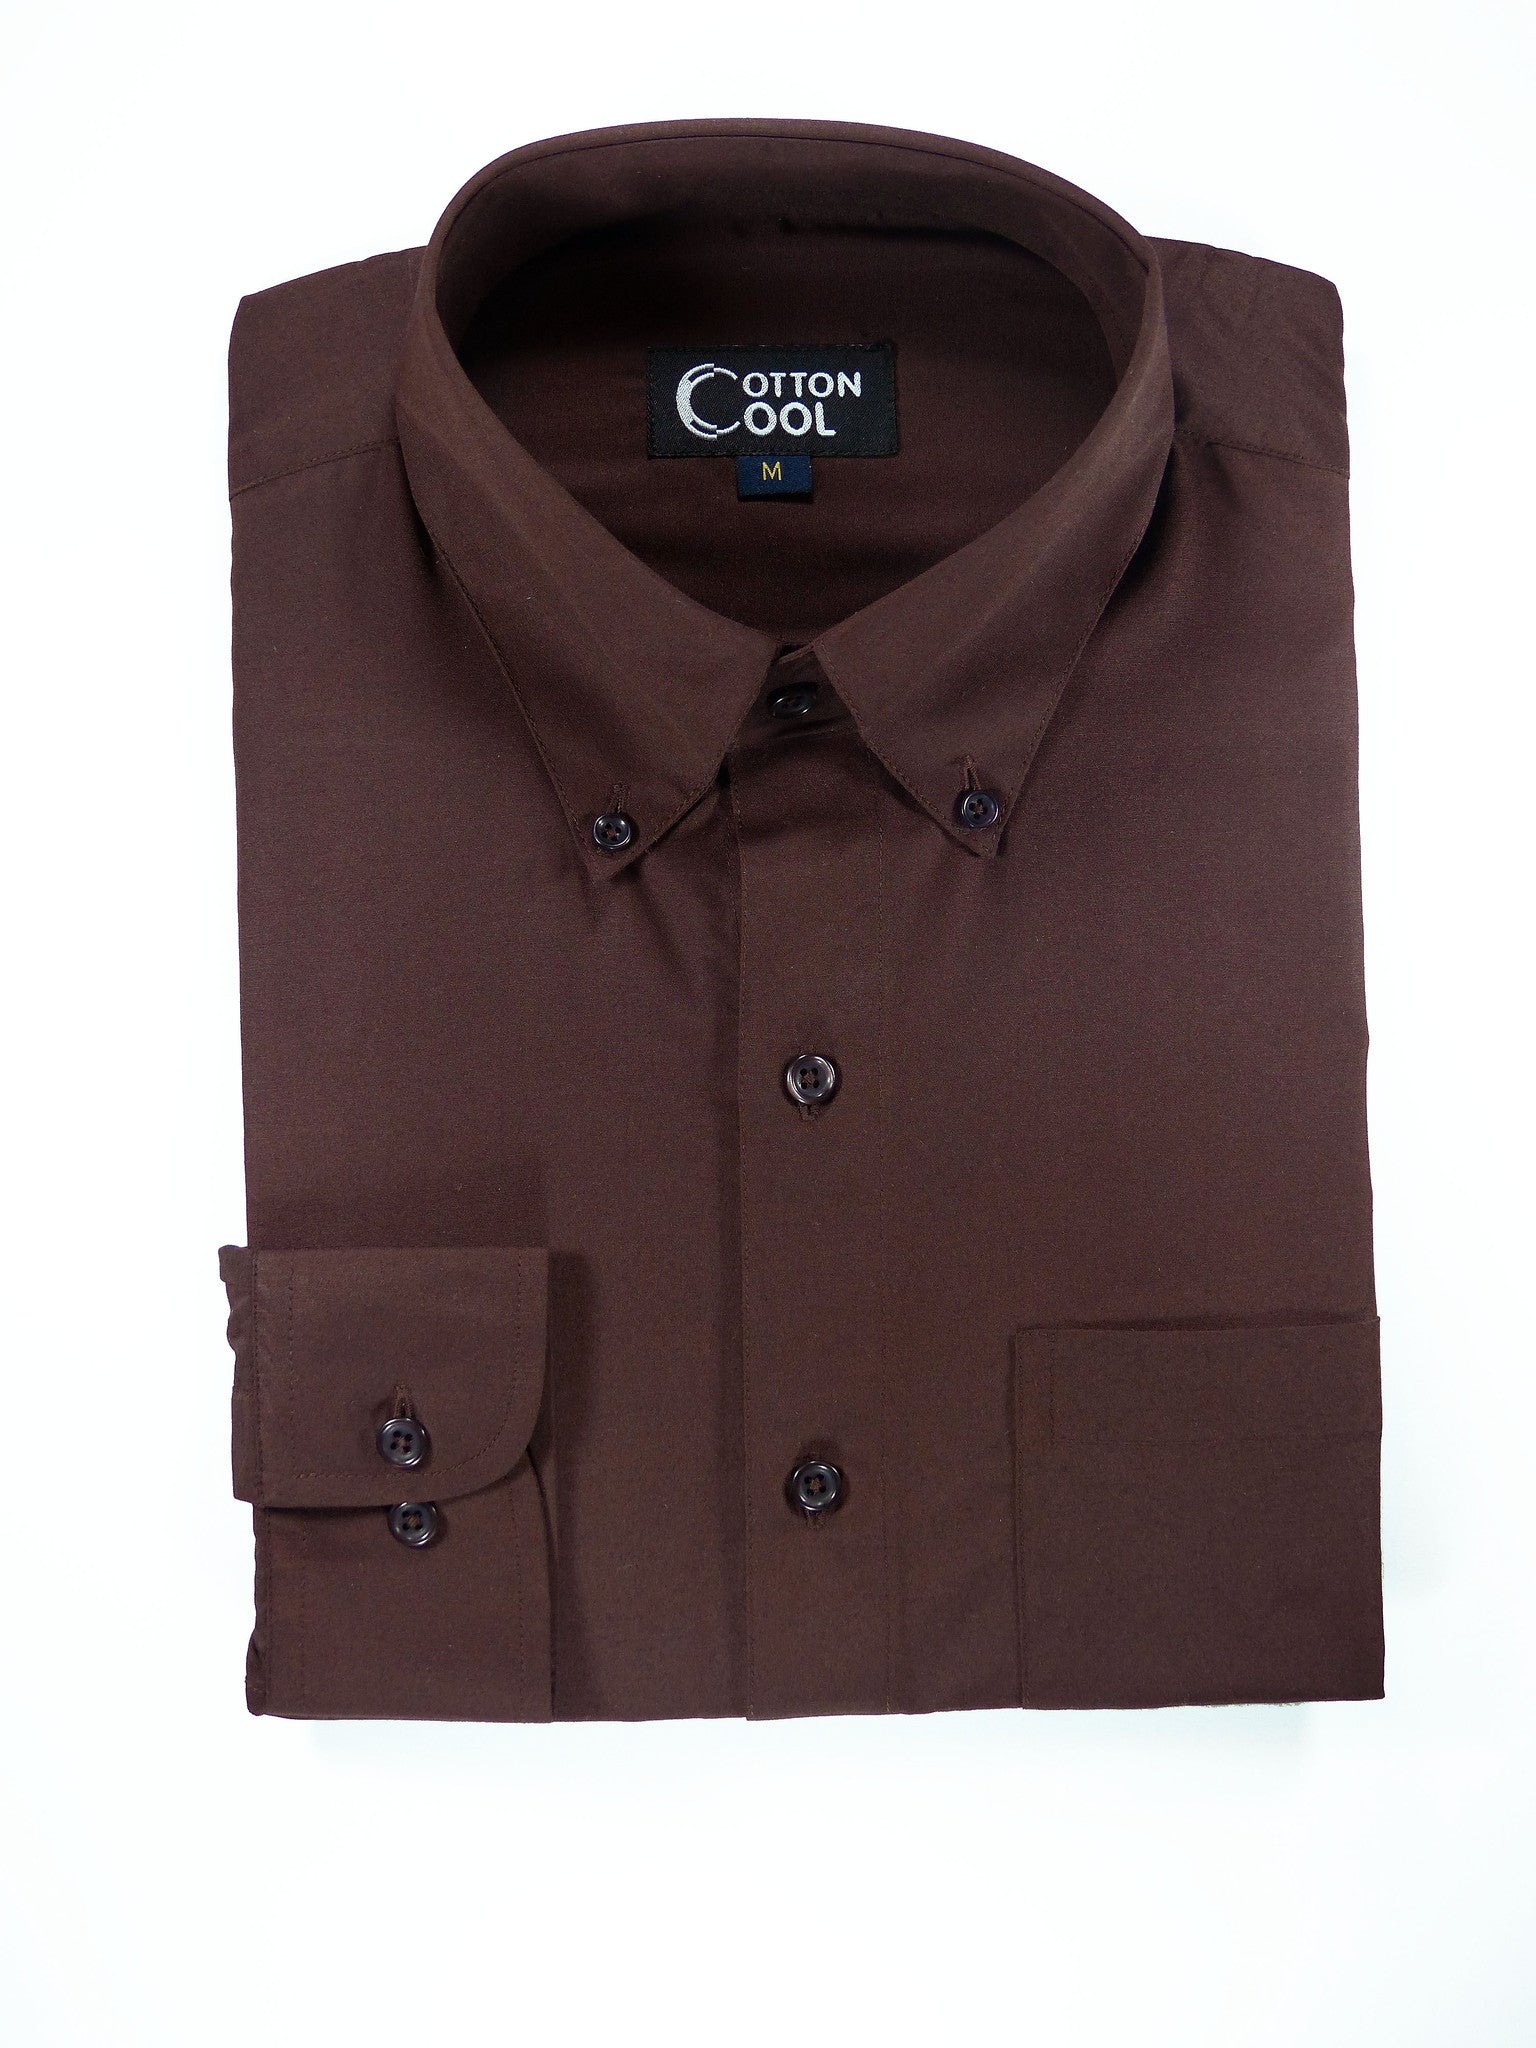 chocolate brown button up shirt